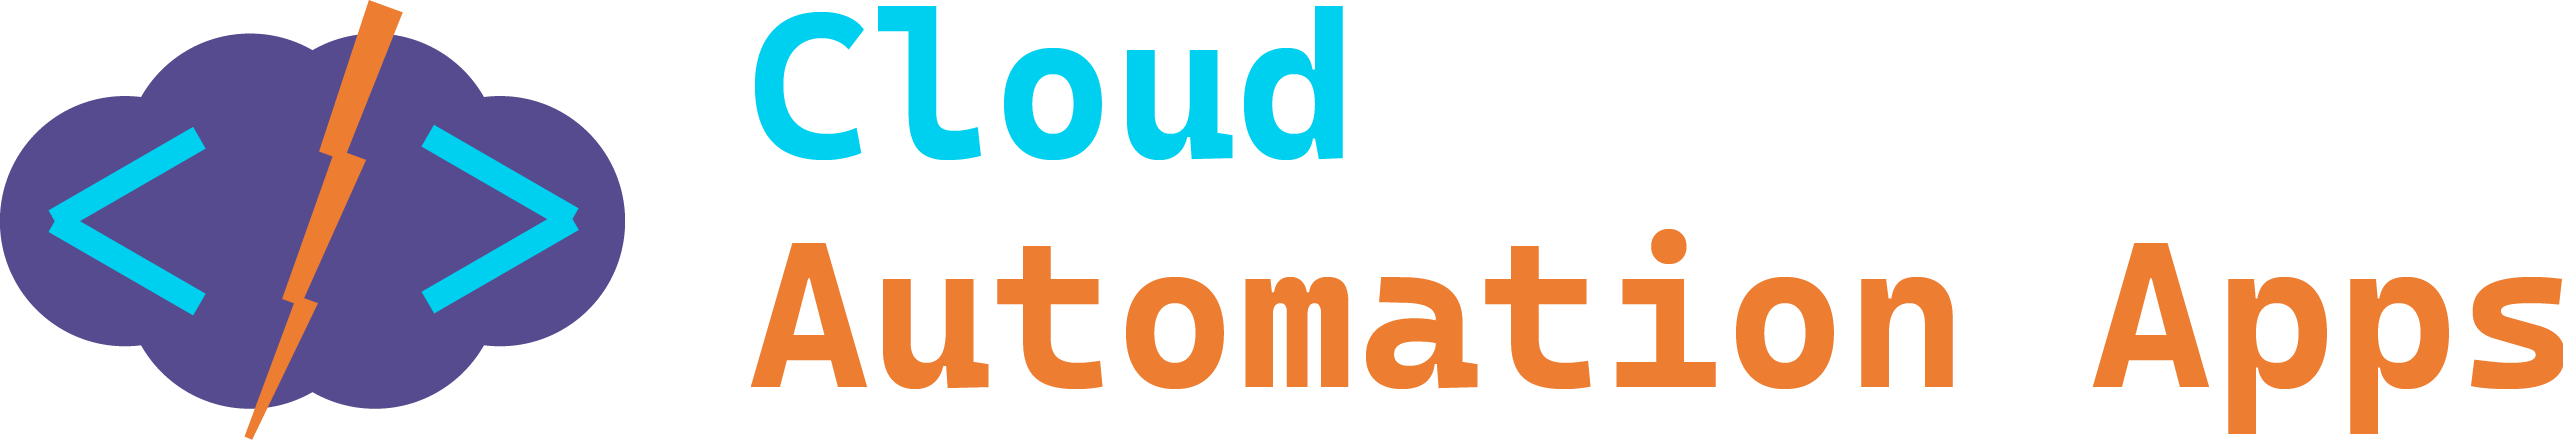 Cloud Automation Apps Logo